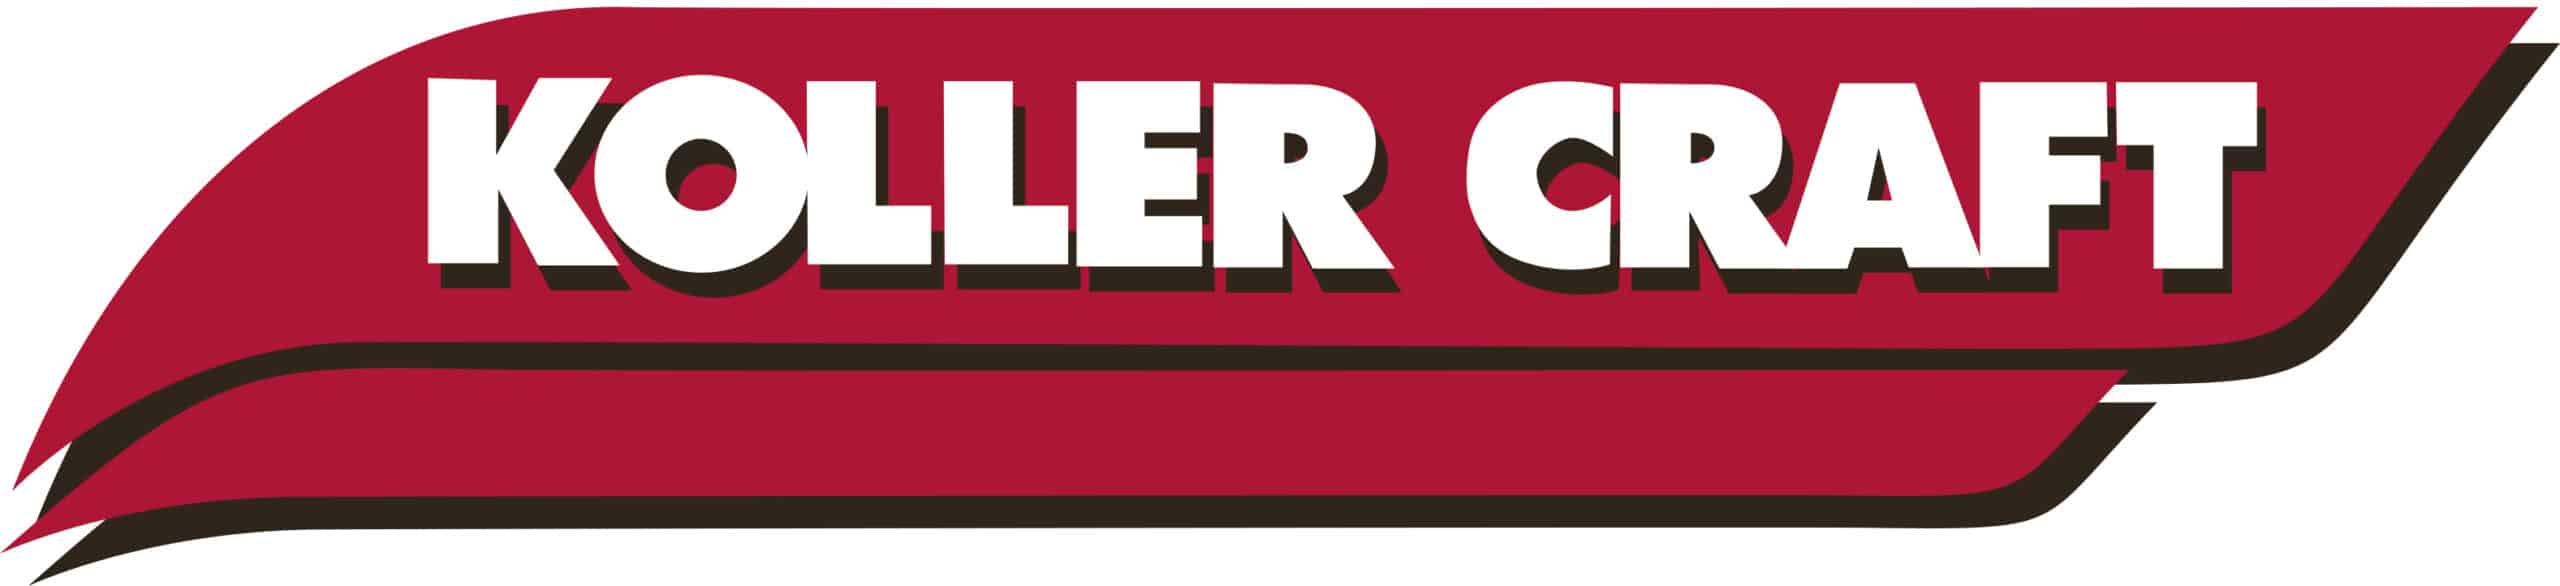 Koller Craft LLC logo